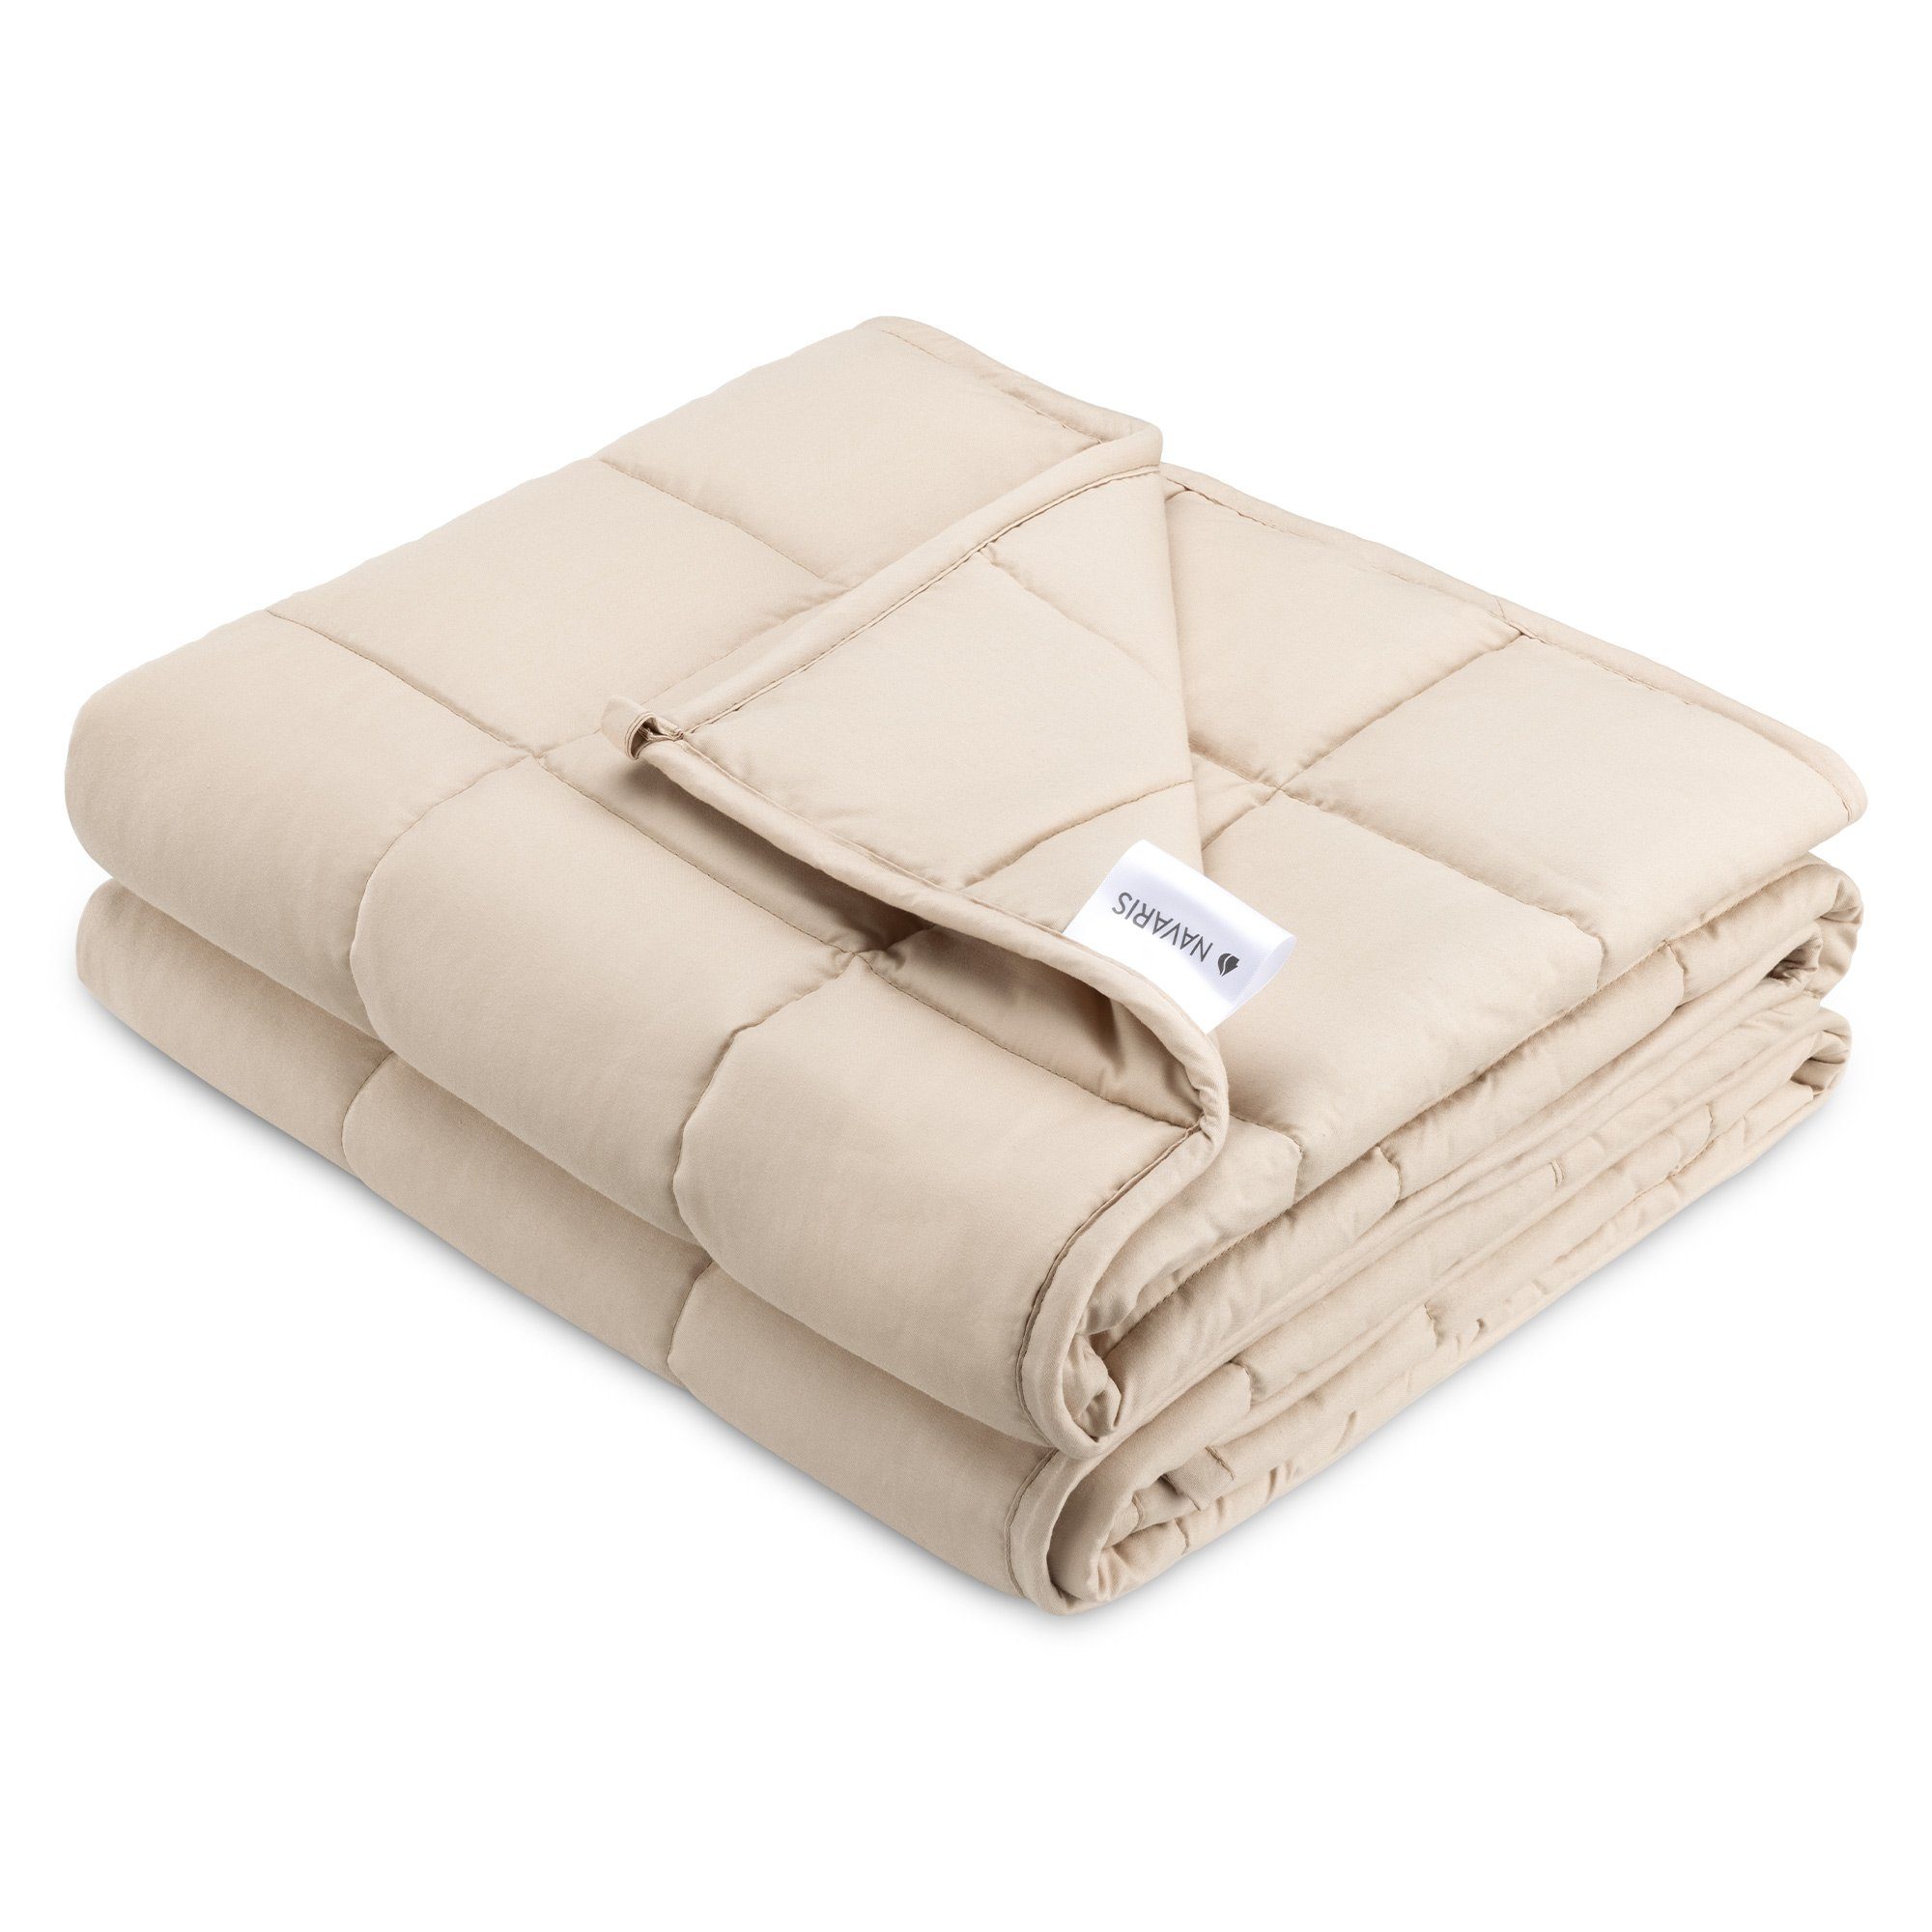 Gewichtsdecke, Beschwerte Bettdecke 135x200 cm 8,8 kg - Bezug aus  Baumwolle, Navaris, Beschwerte Bettdecke 135x200 cm 8,8 kg - Bezug aus  Baumwolle